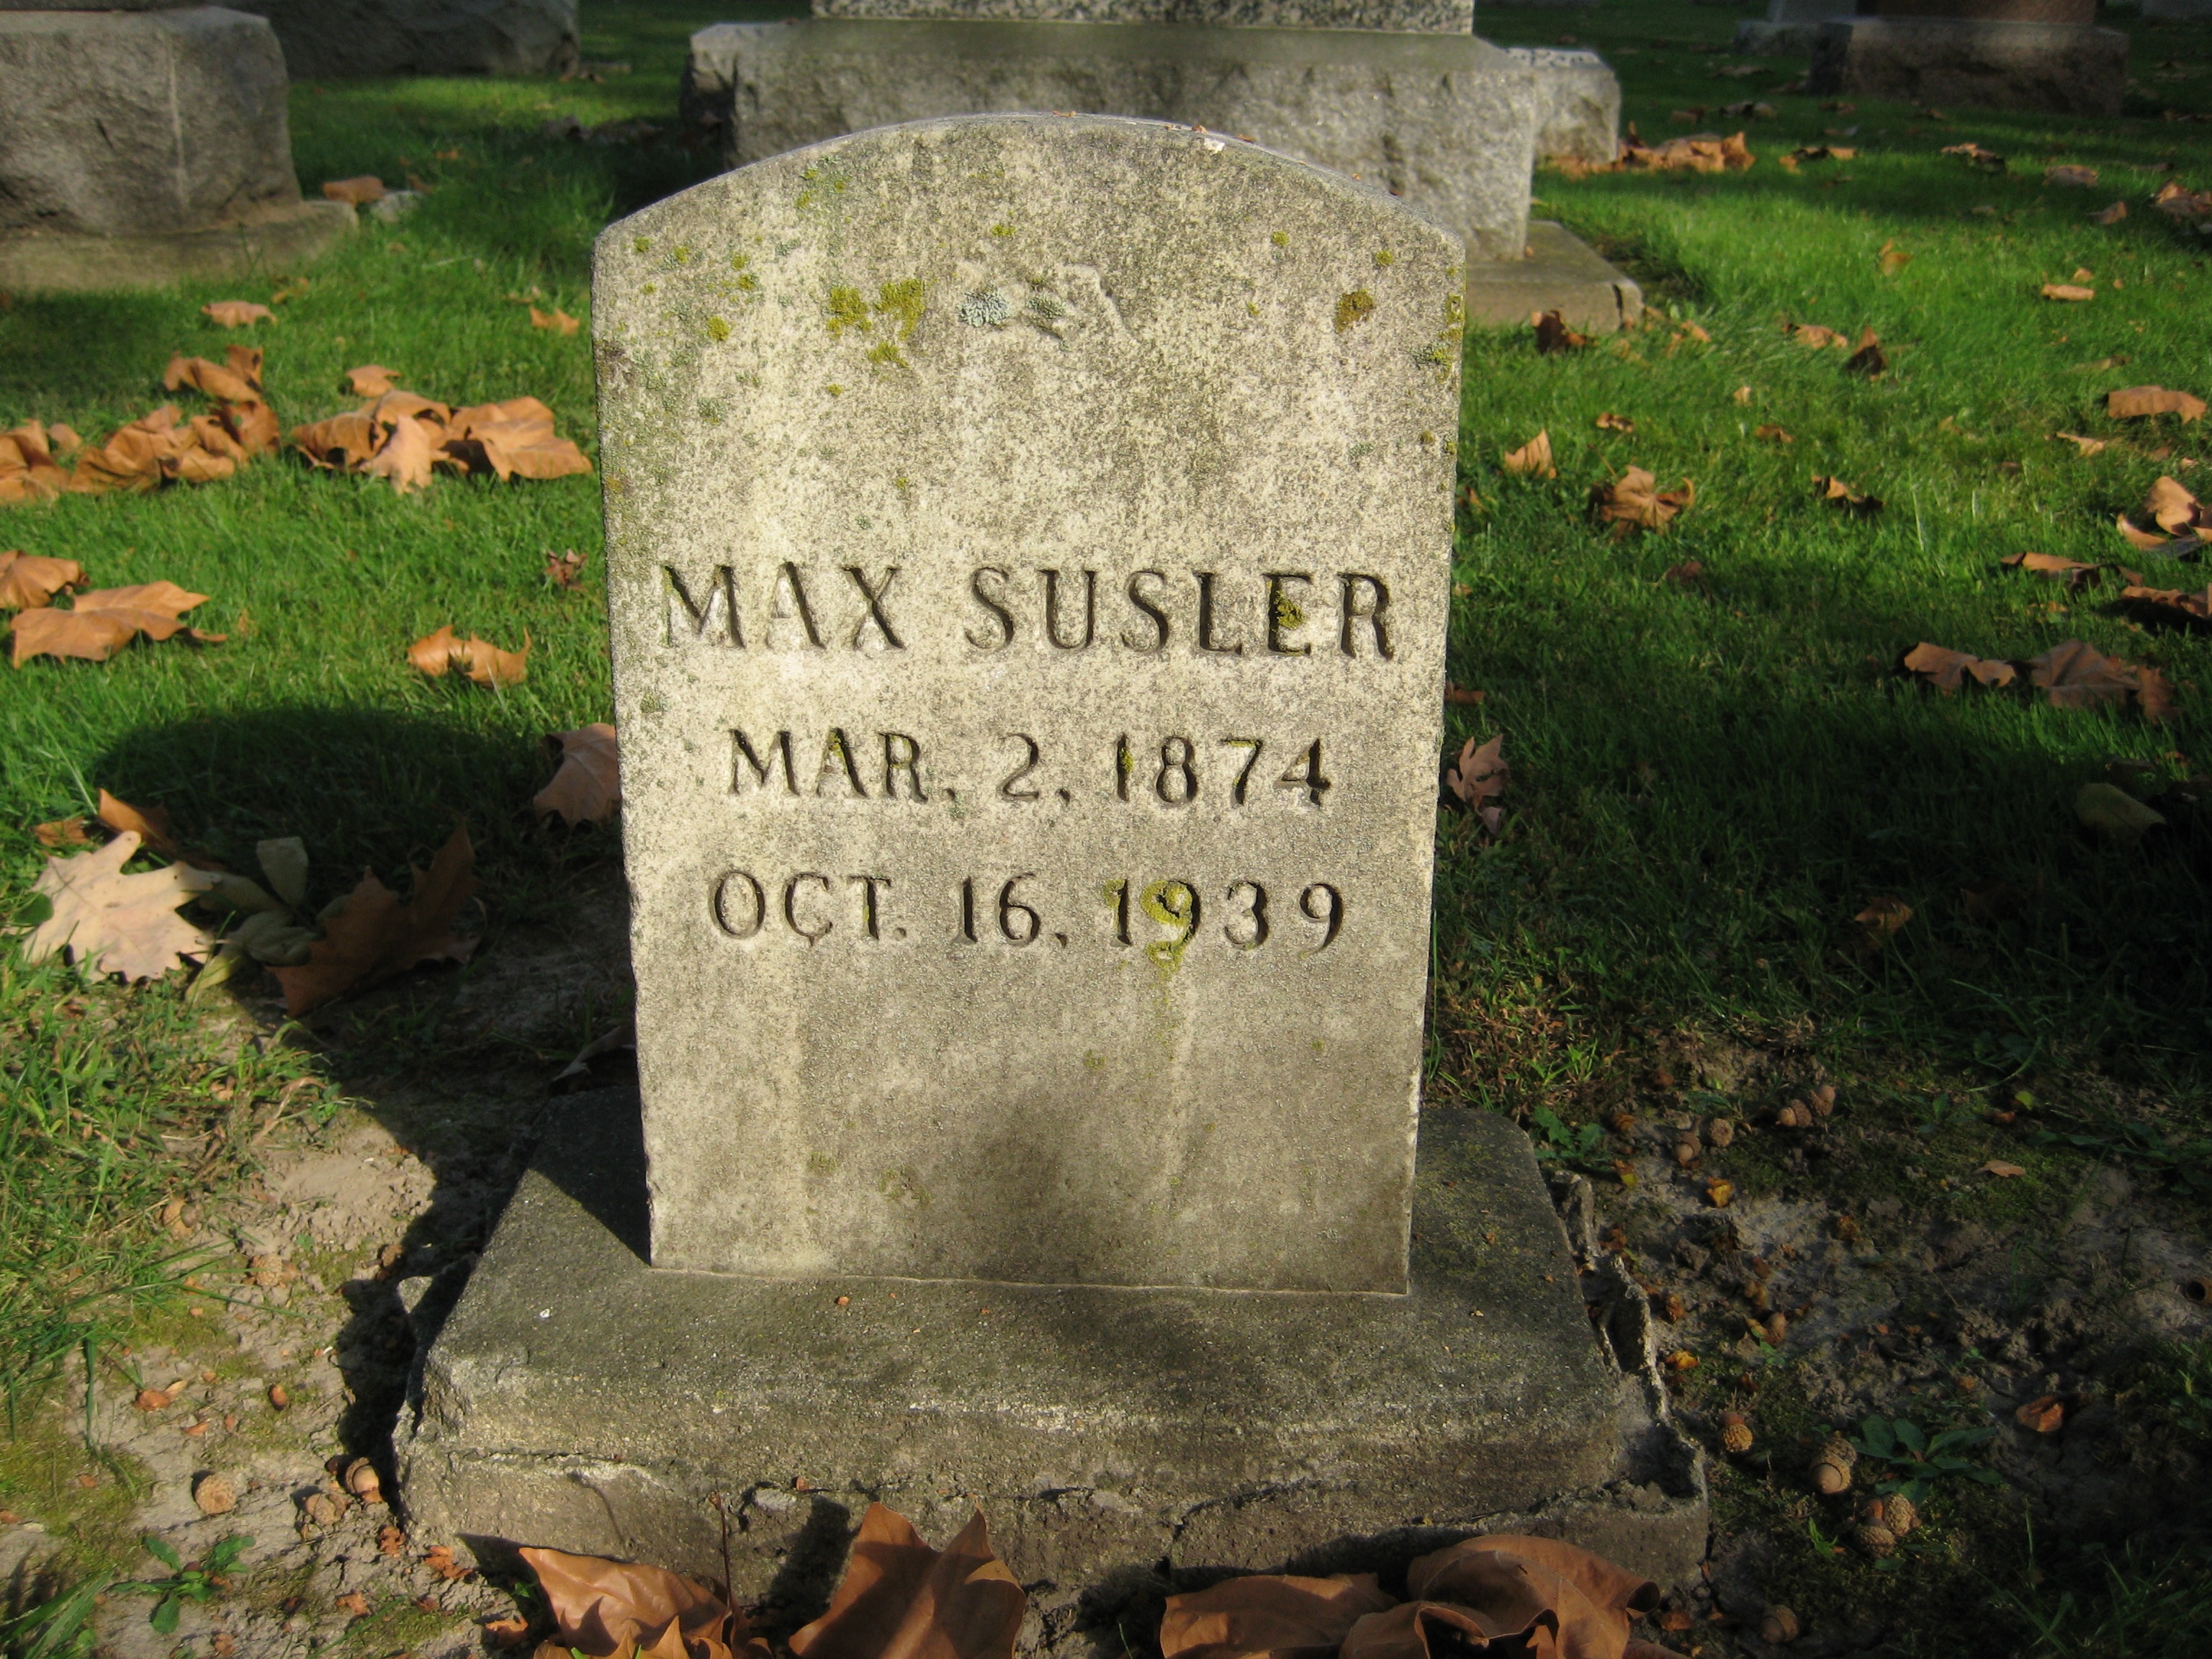 Susler, Max